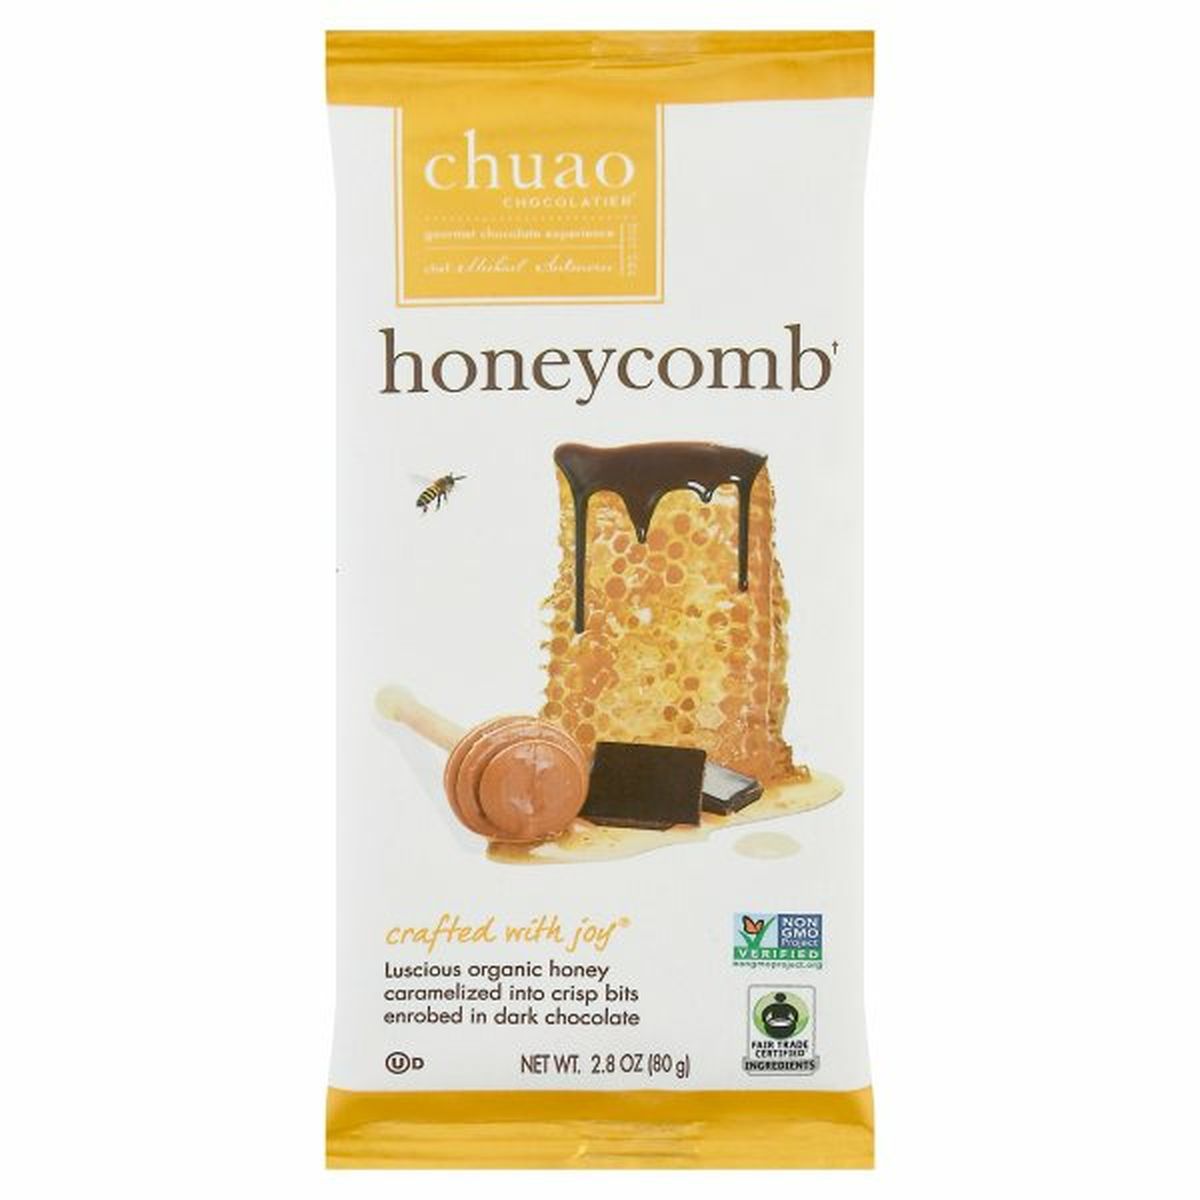 Calories in chuao Dark Chocolate Bar, Honeycomb